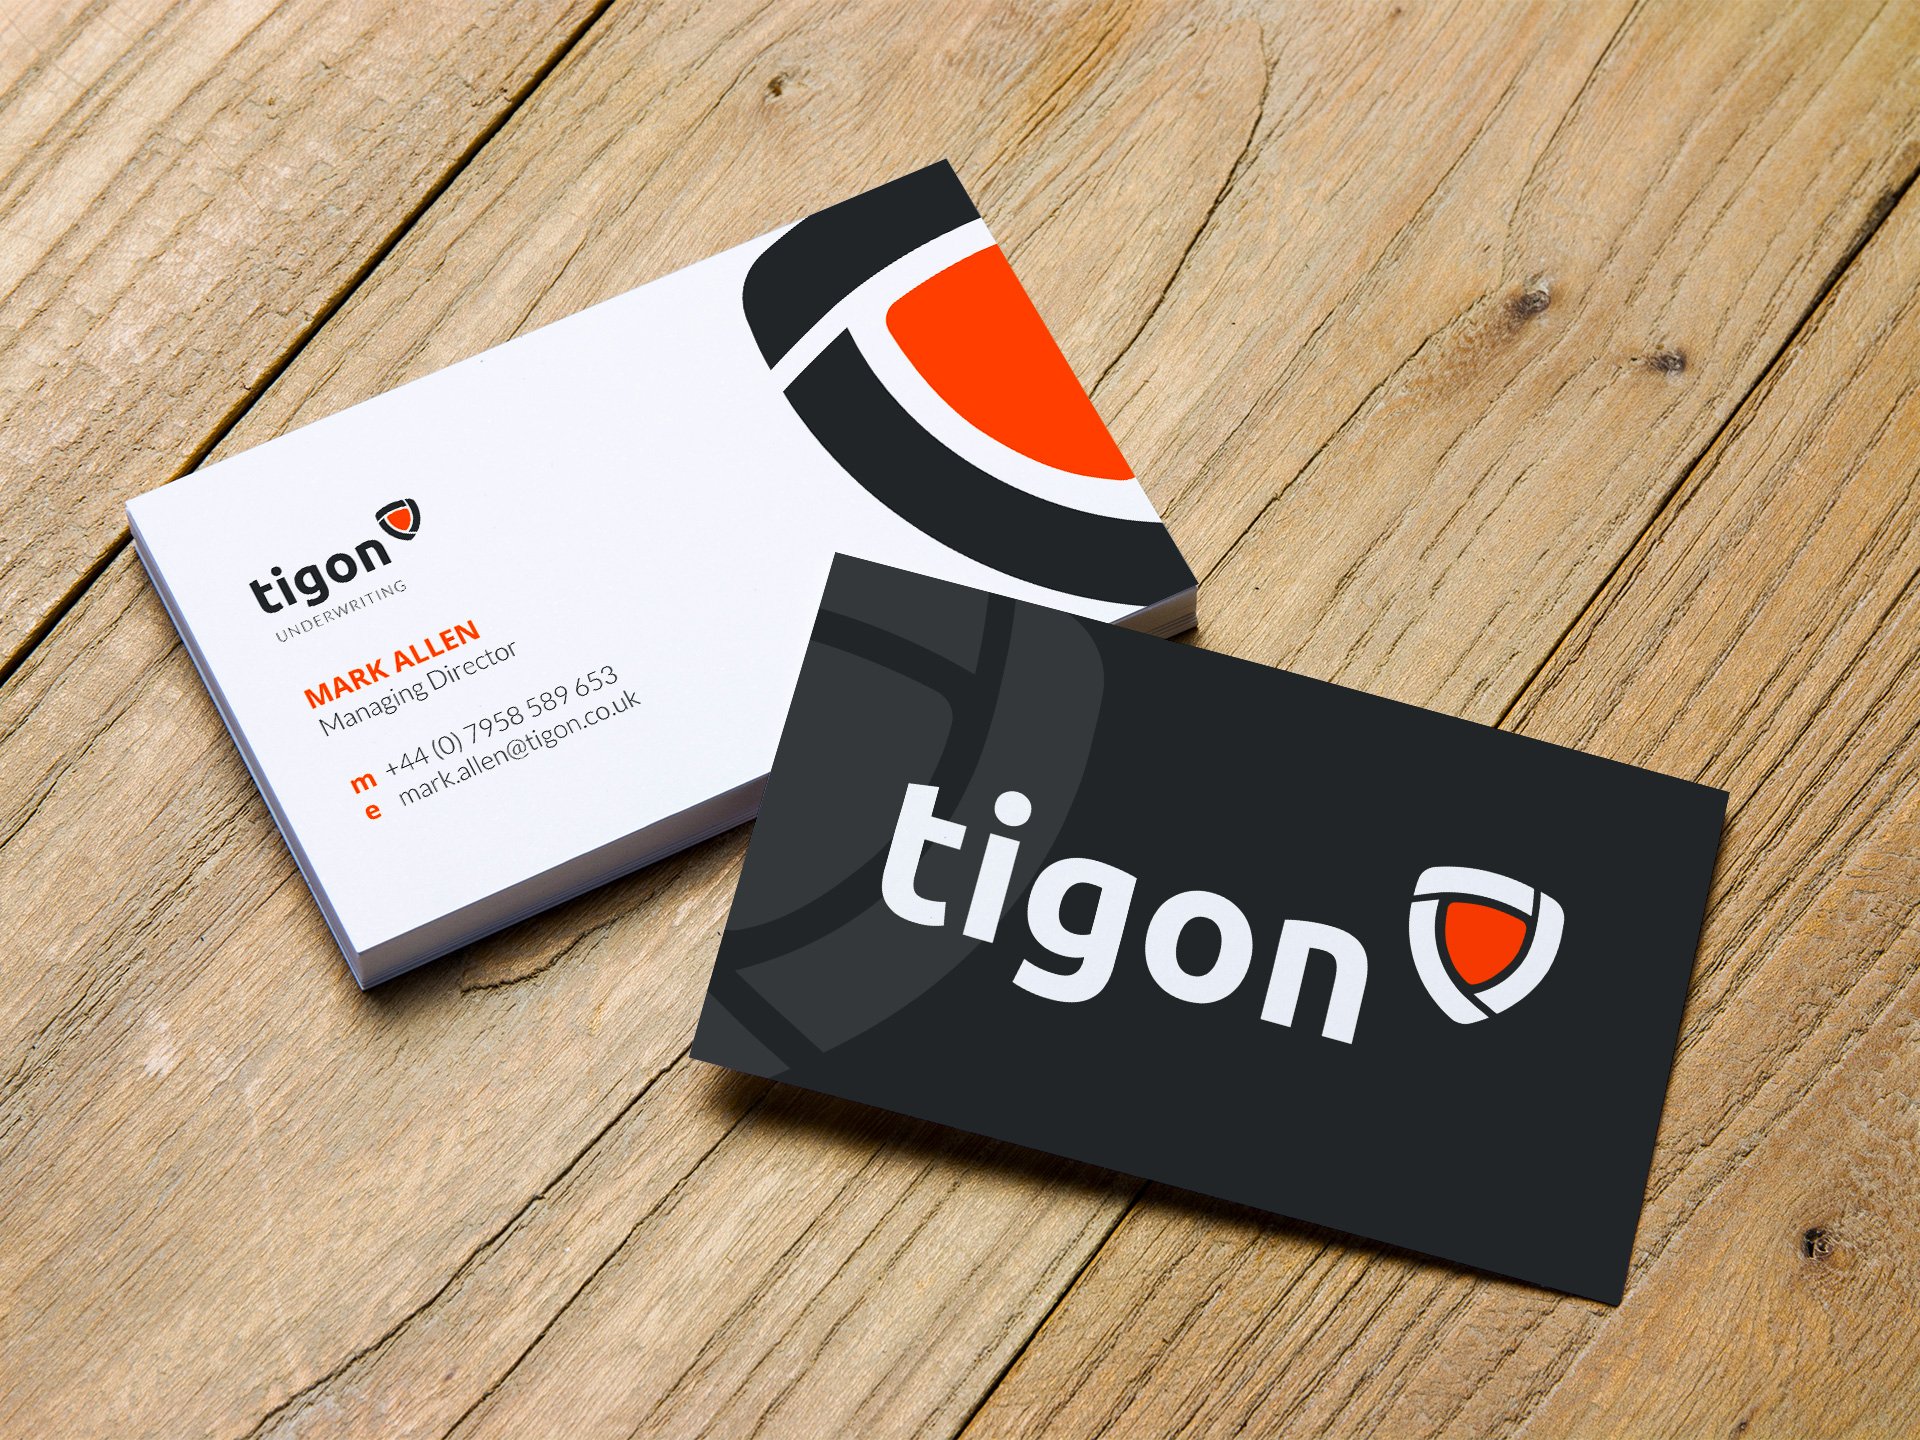 Tigon Business Card by Casper Creative